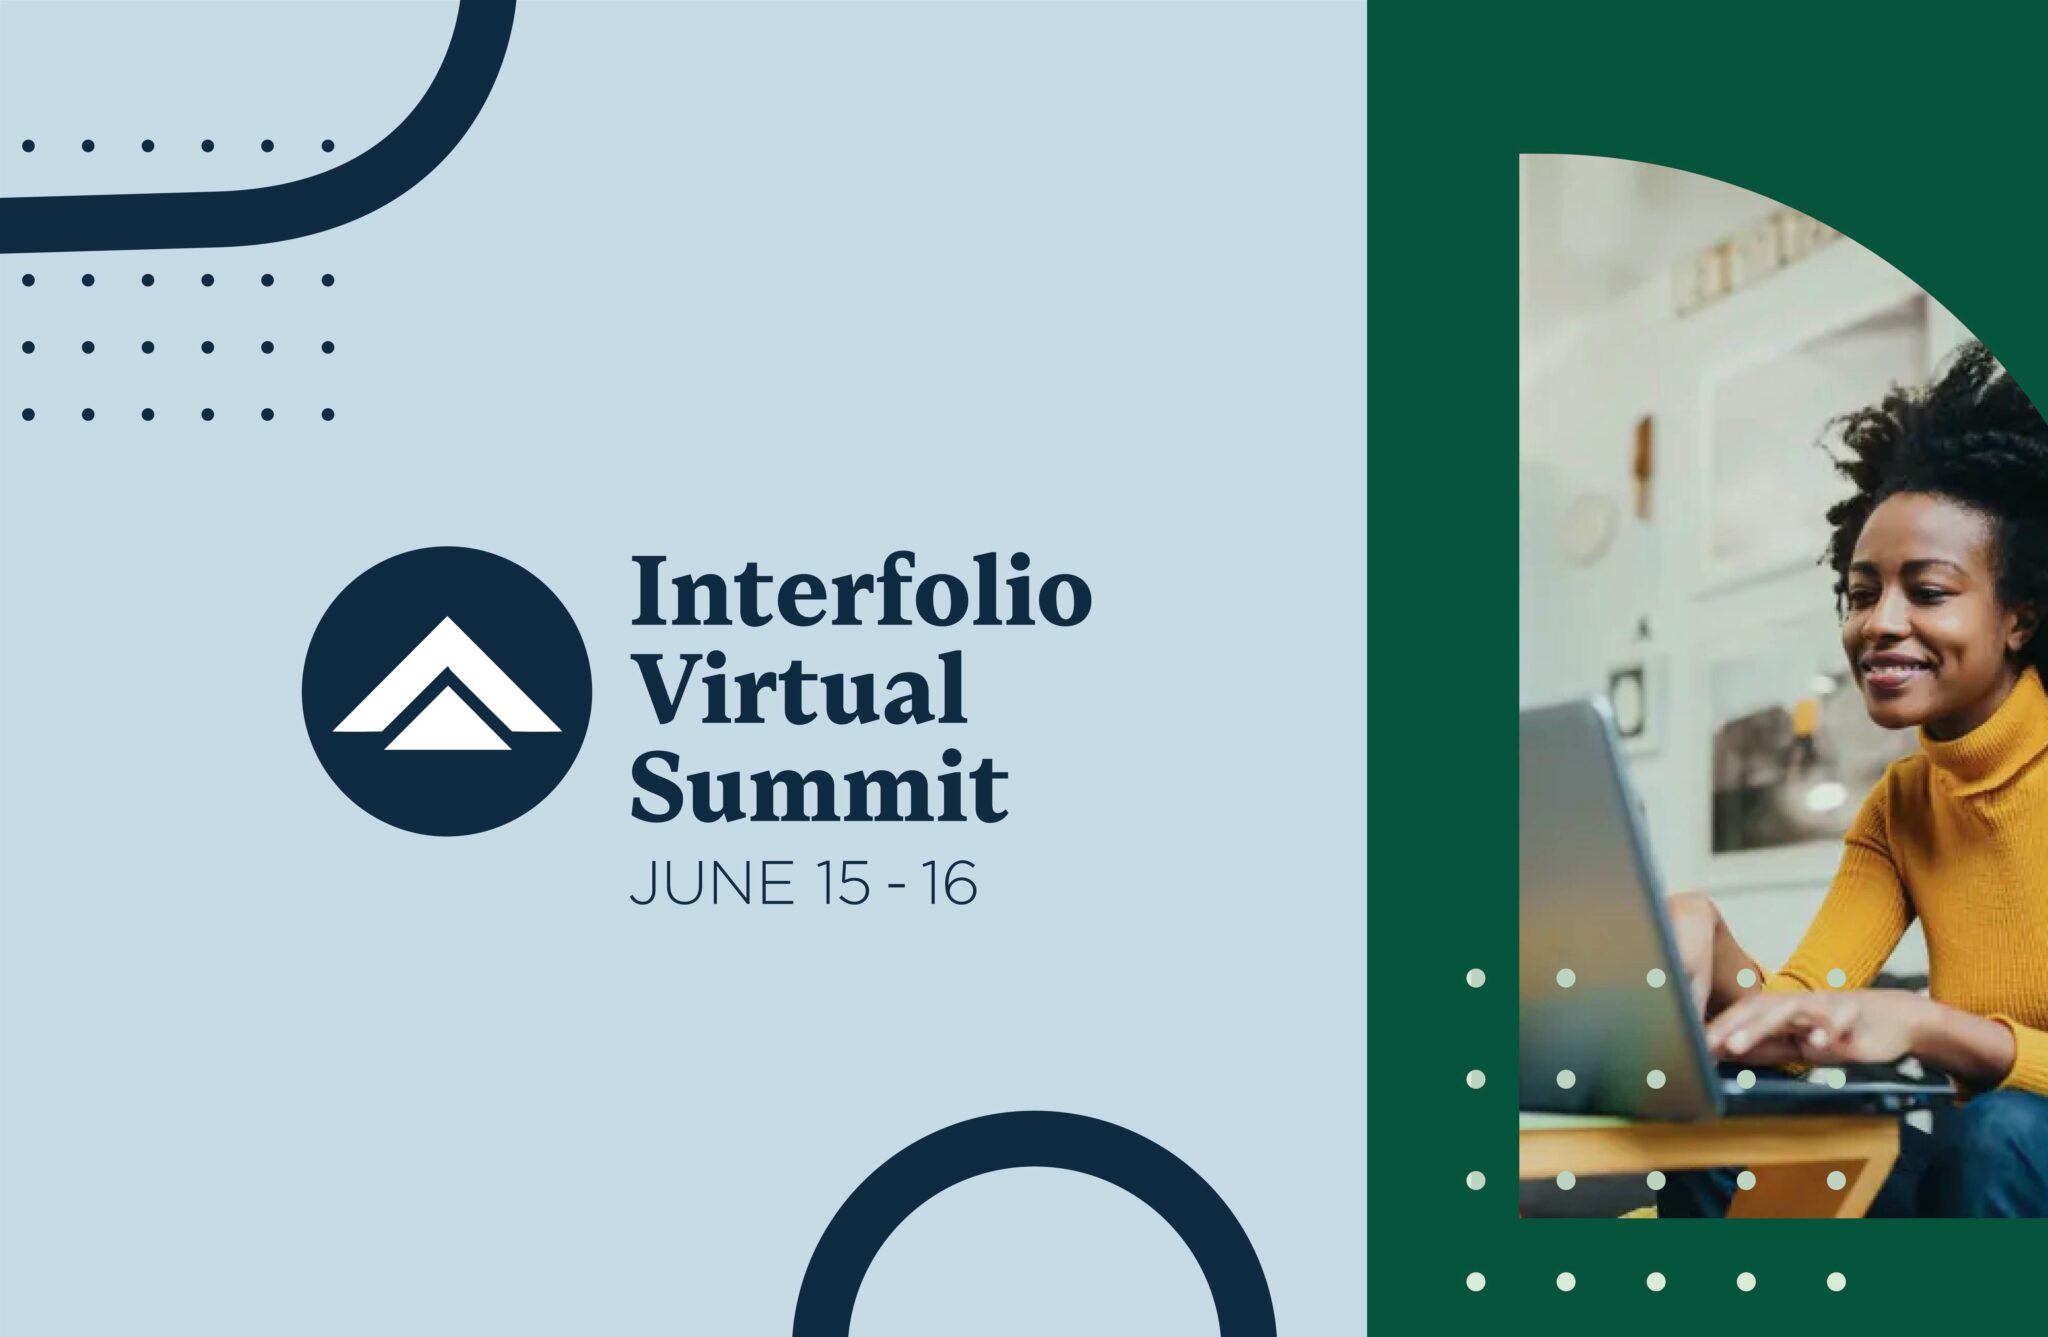 Interfolio virtual summit